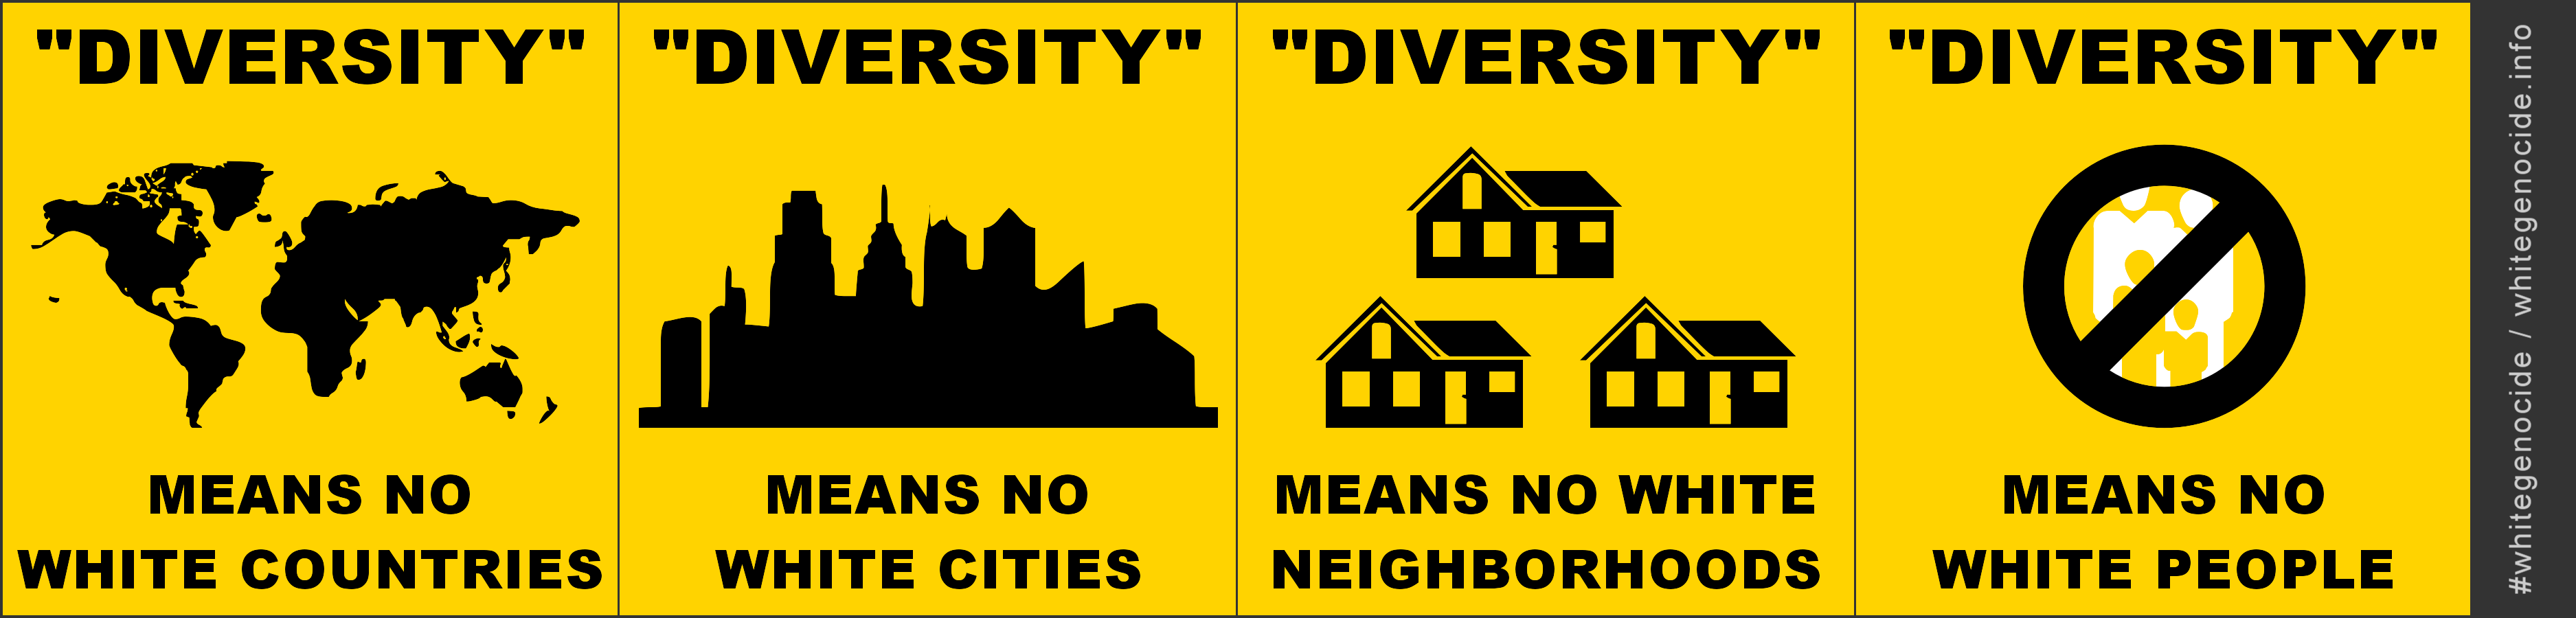 graphic - diversity means no white - single line